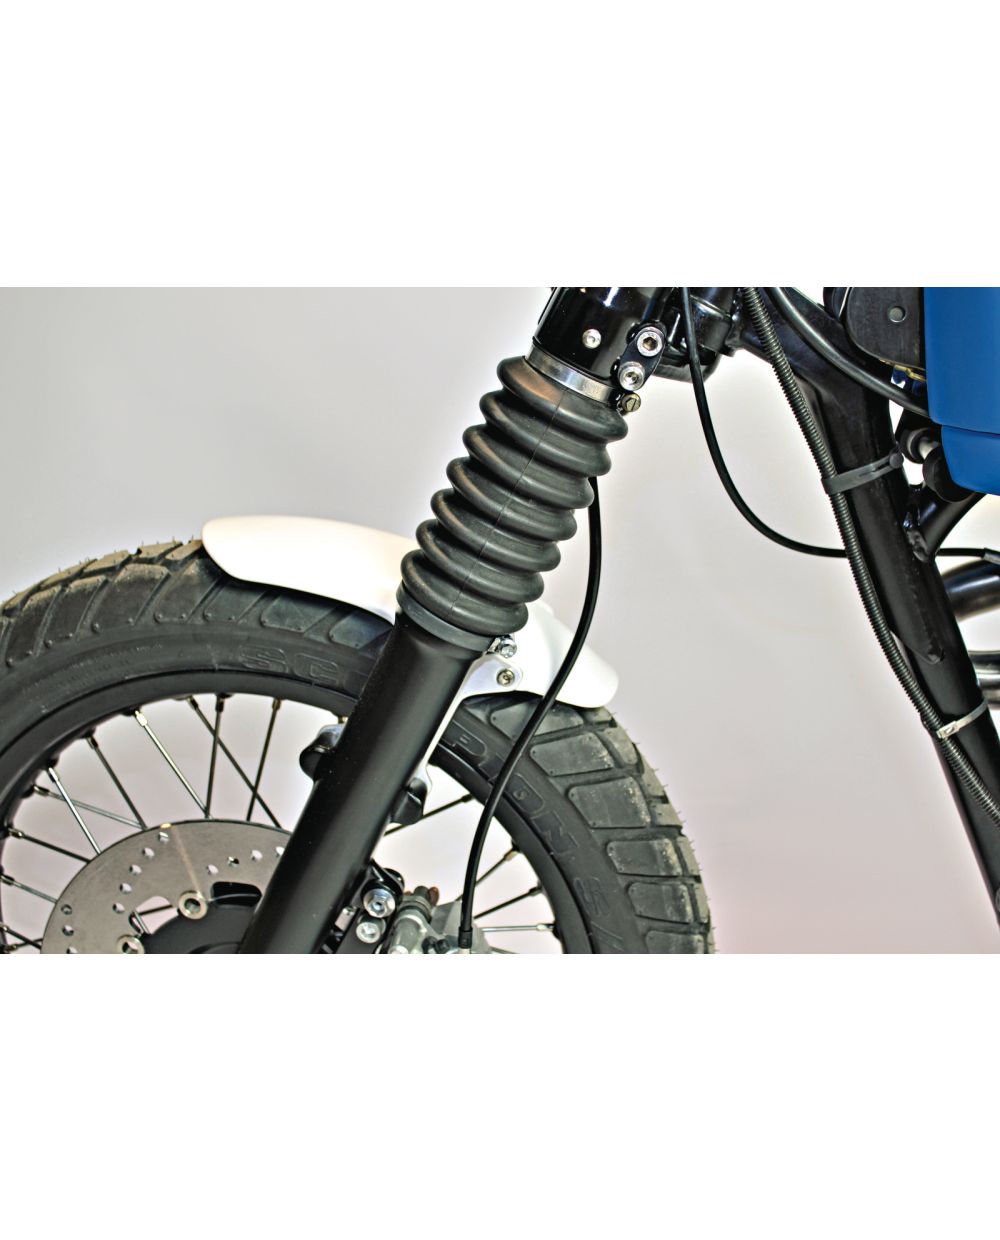 JvB-moto Kotflügel 'D-Track' vorn inkl. Alu-Halter (ABS unlackiert